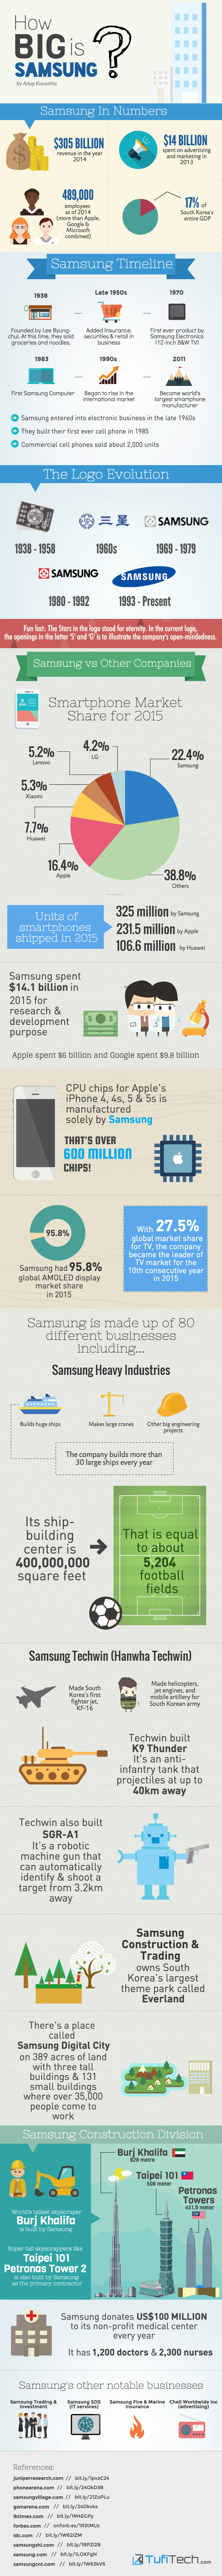 How Big Is Samsung?